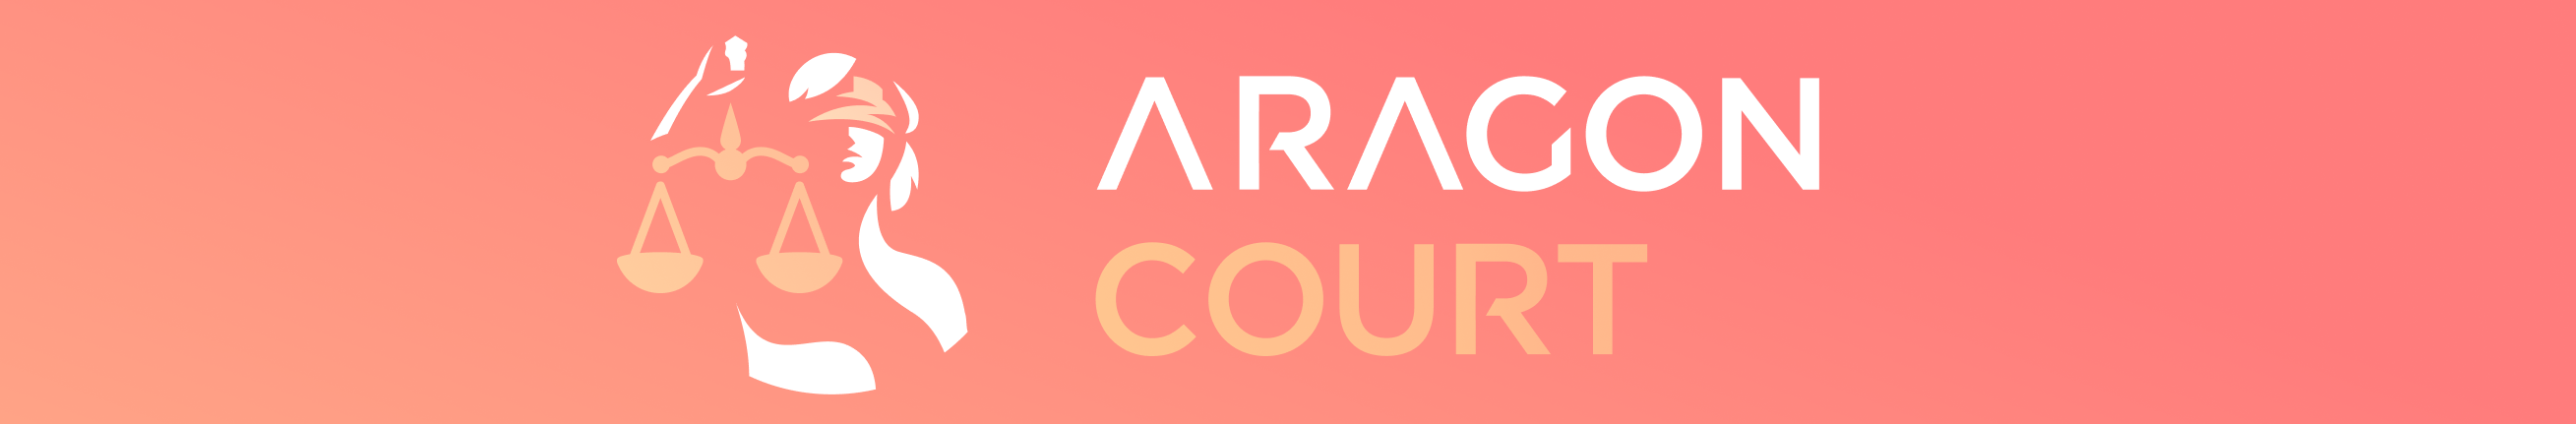 Aragon Court